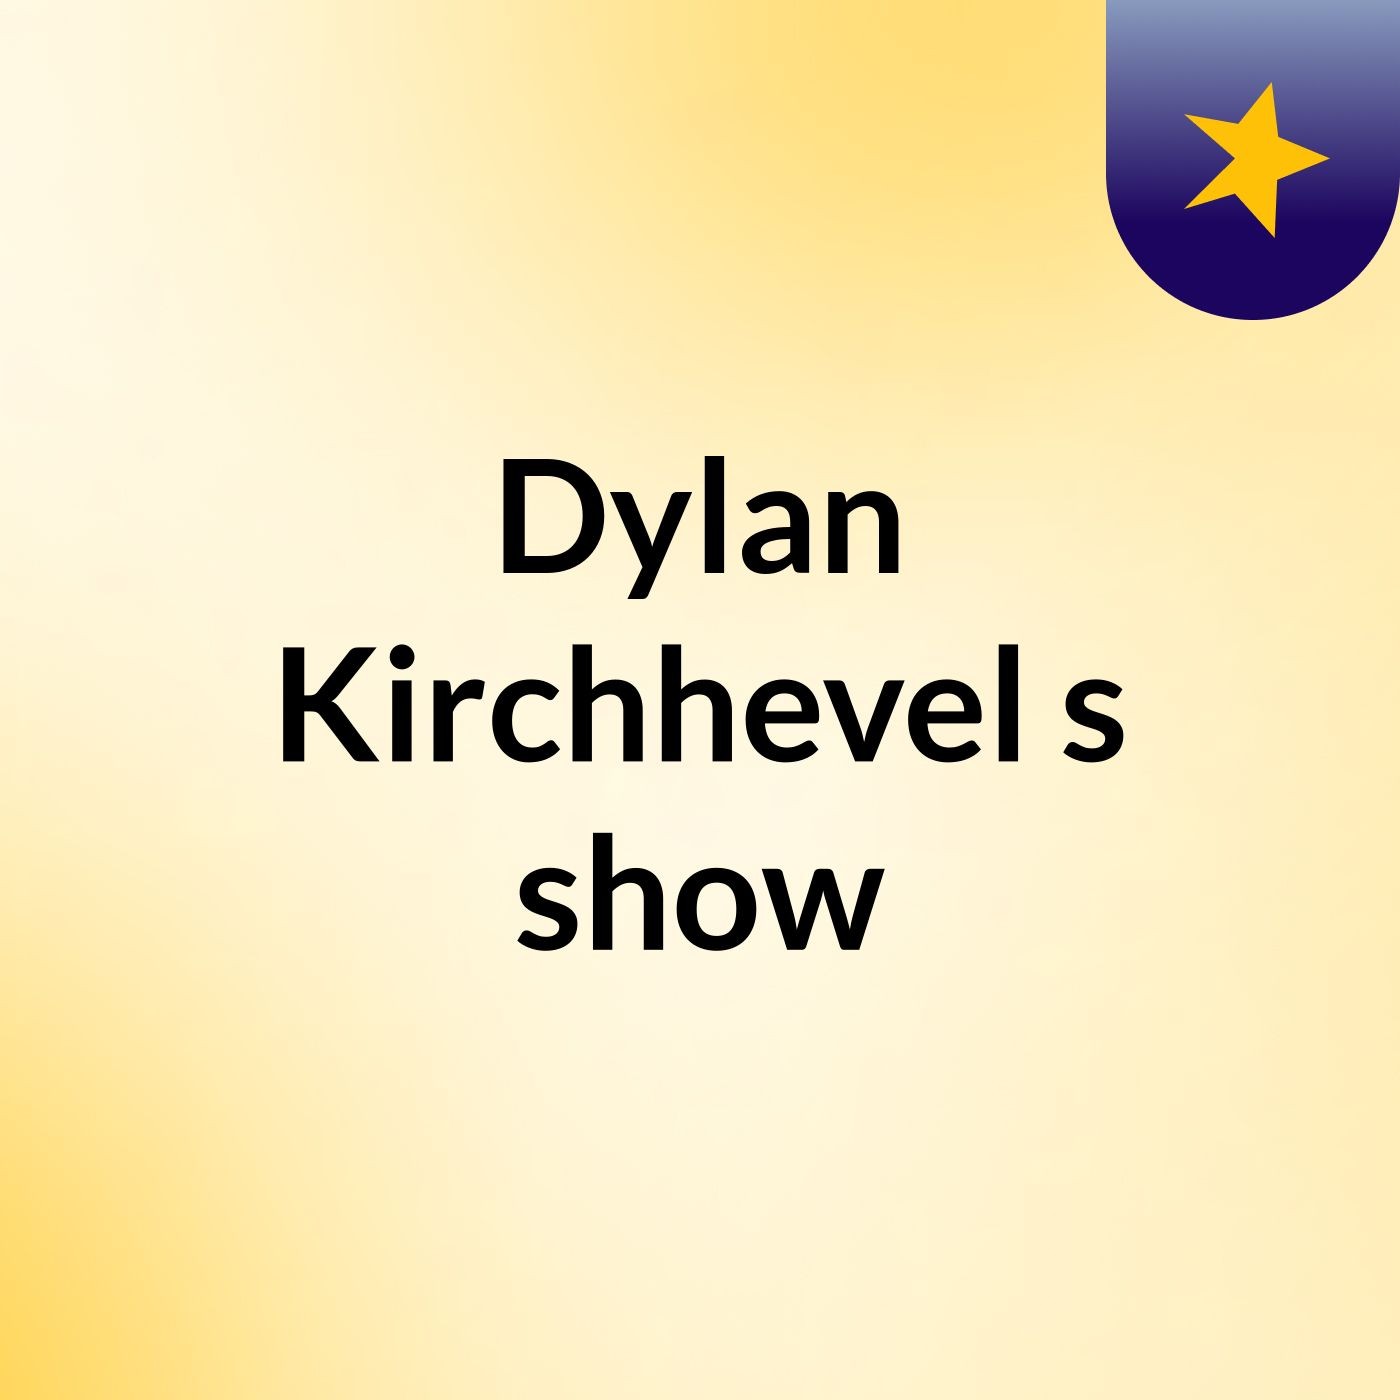 Dylan Kirchhevel's show